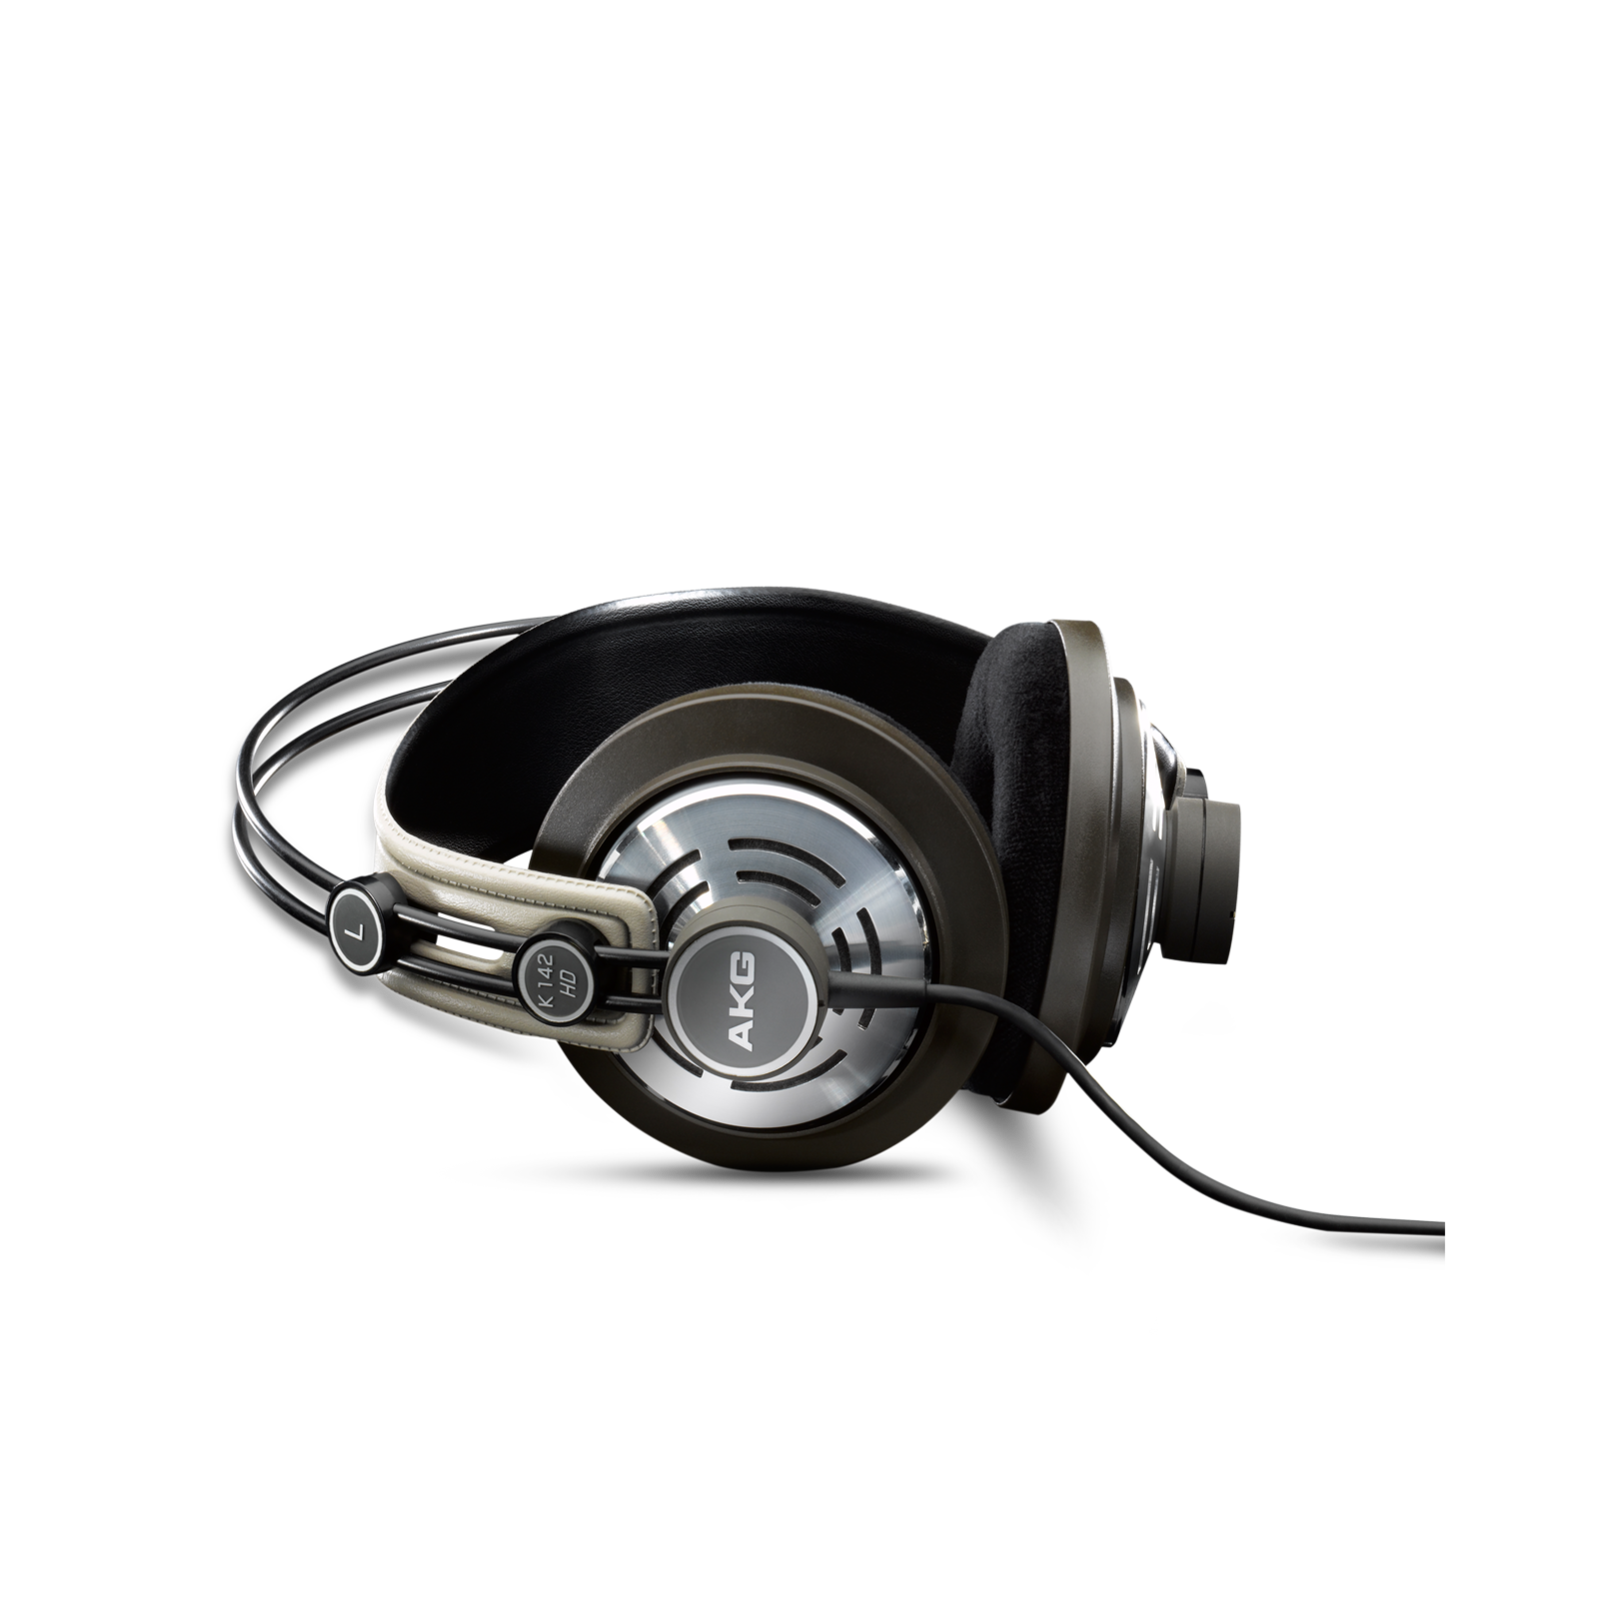 K142HD (discontinued) - Black - Over-ear, semi-open studio headphones with adjustable headband - Hero